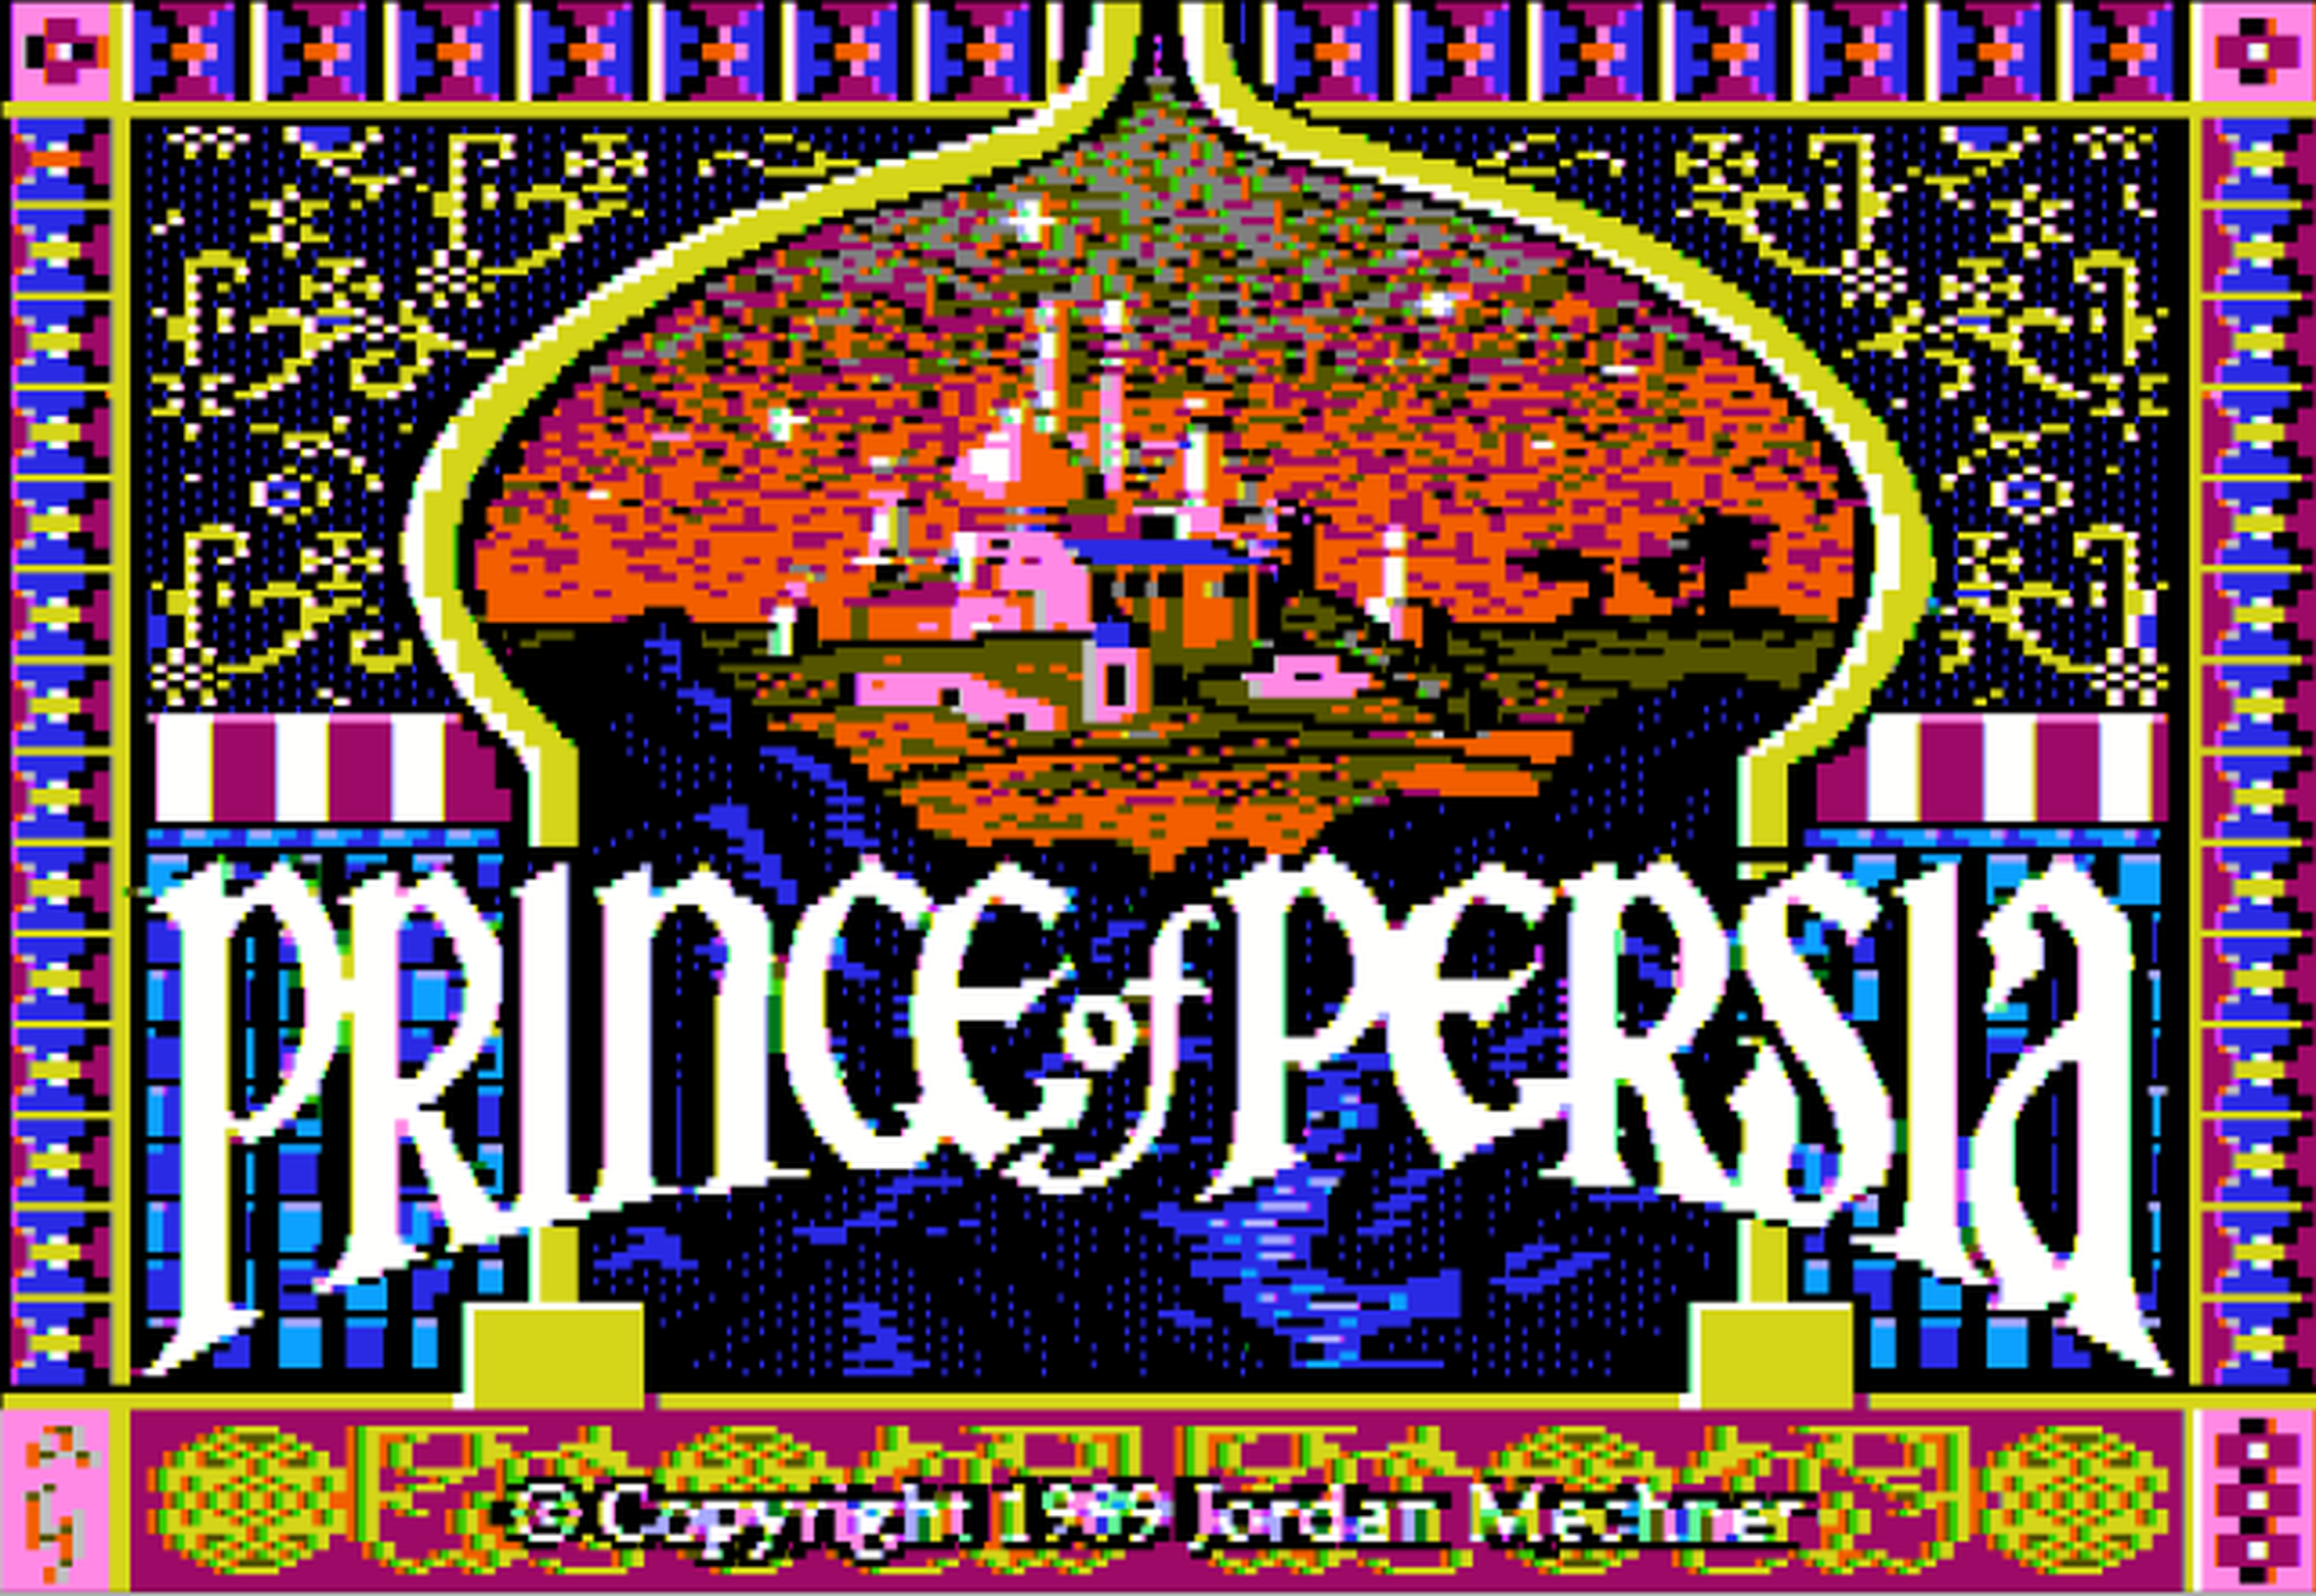 Prince of Persia Portada